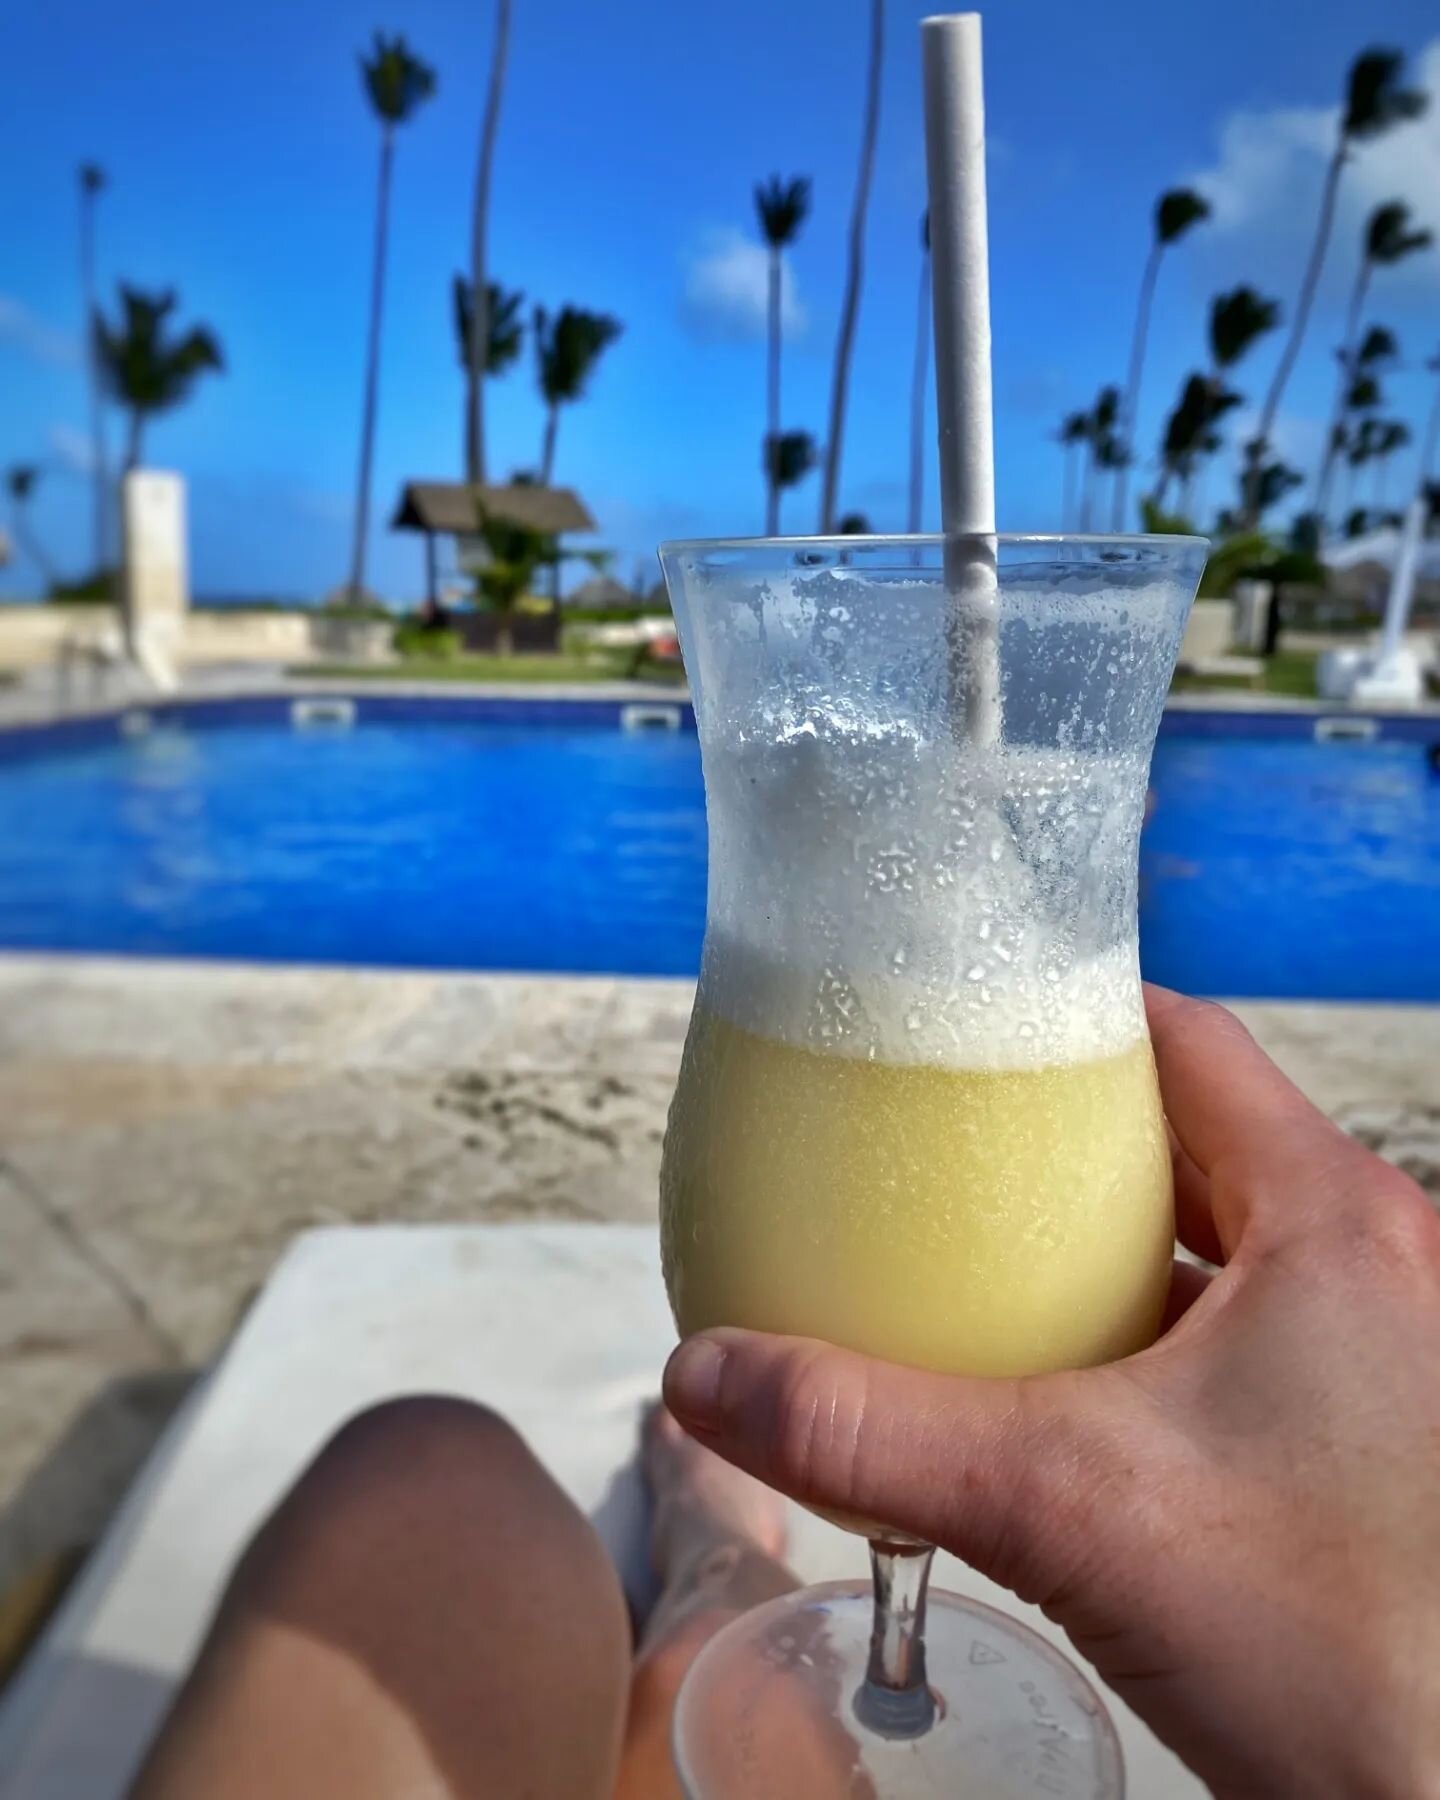 🎵☀️&quot;Girls just wanna have sun&quot;☀️🎵
.
.
.
📍Iberostar, Punta Cana, 📸 Kate&amp;Ben
.
.
#lovetotravel #livingmybestlife #lavistavacay #lavista #vacationmode #view #vacationpics #viewsfordays #vistavacations #vistavacay #drinks #drinkup #trav